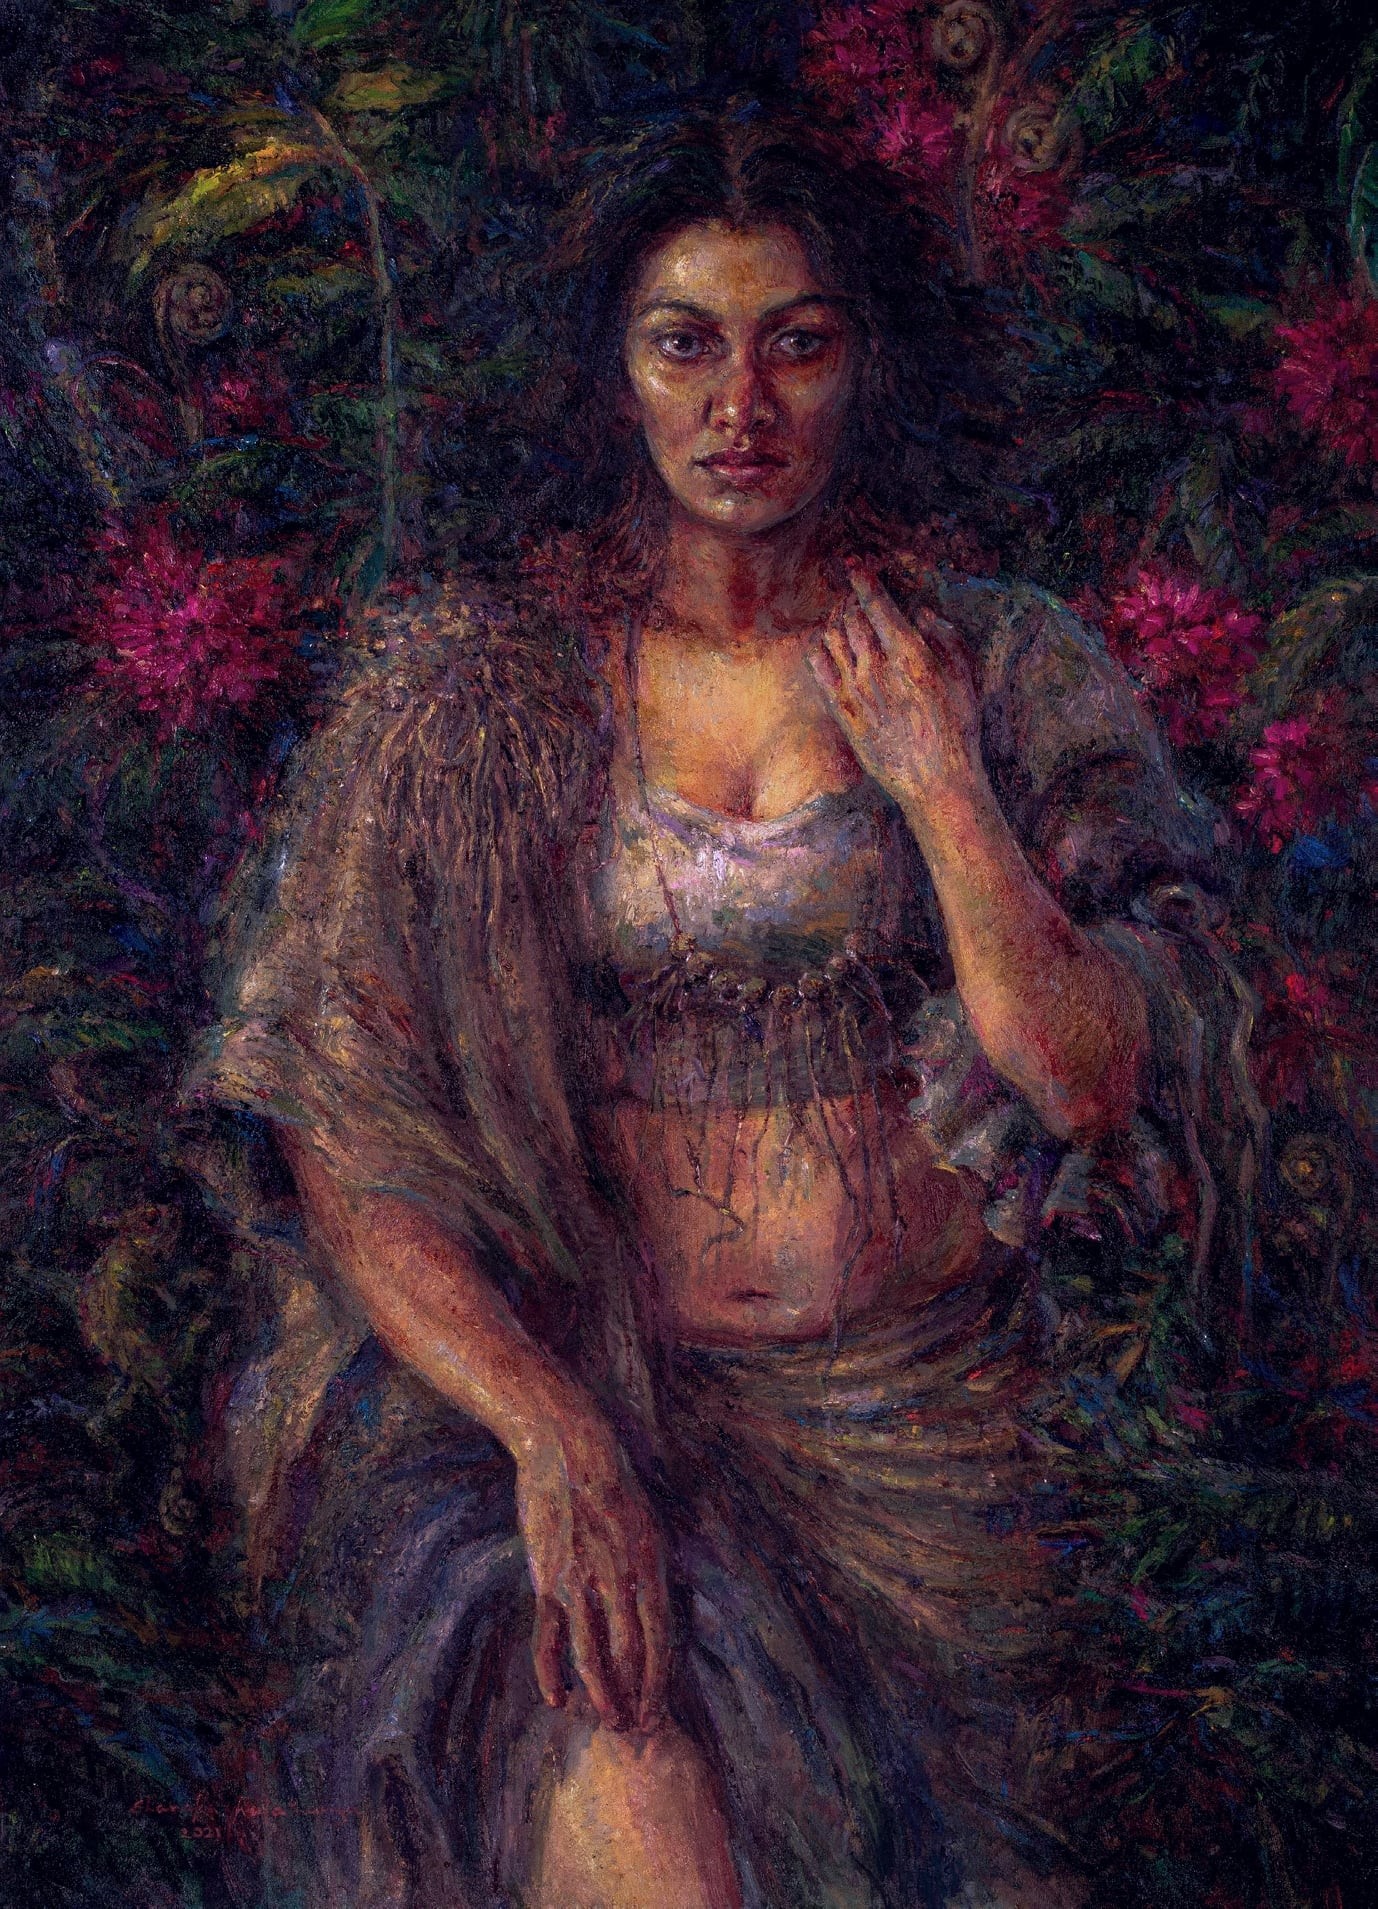 Lady from the cloudy forest by Shanaka Kulathunga